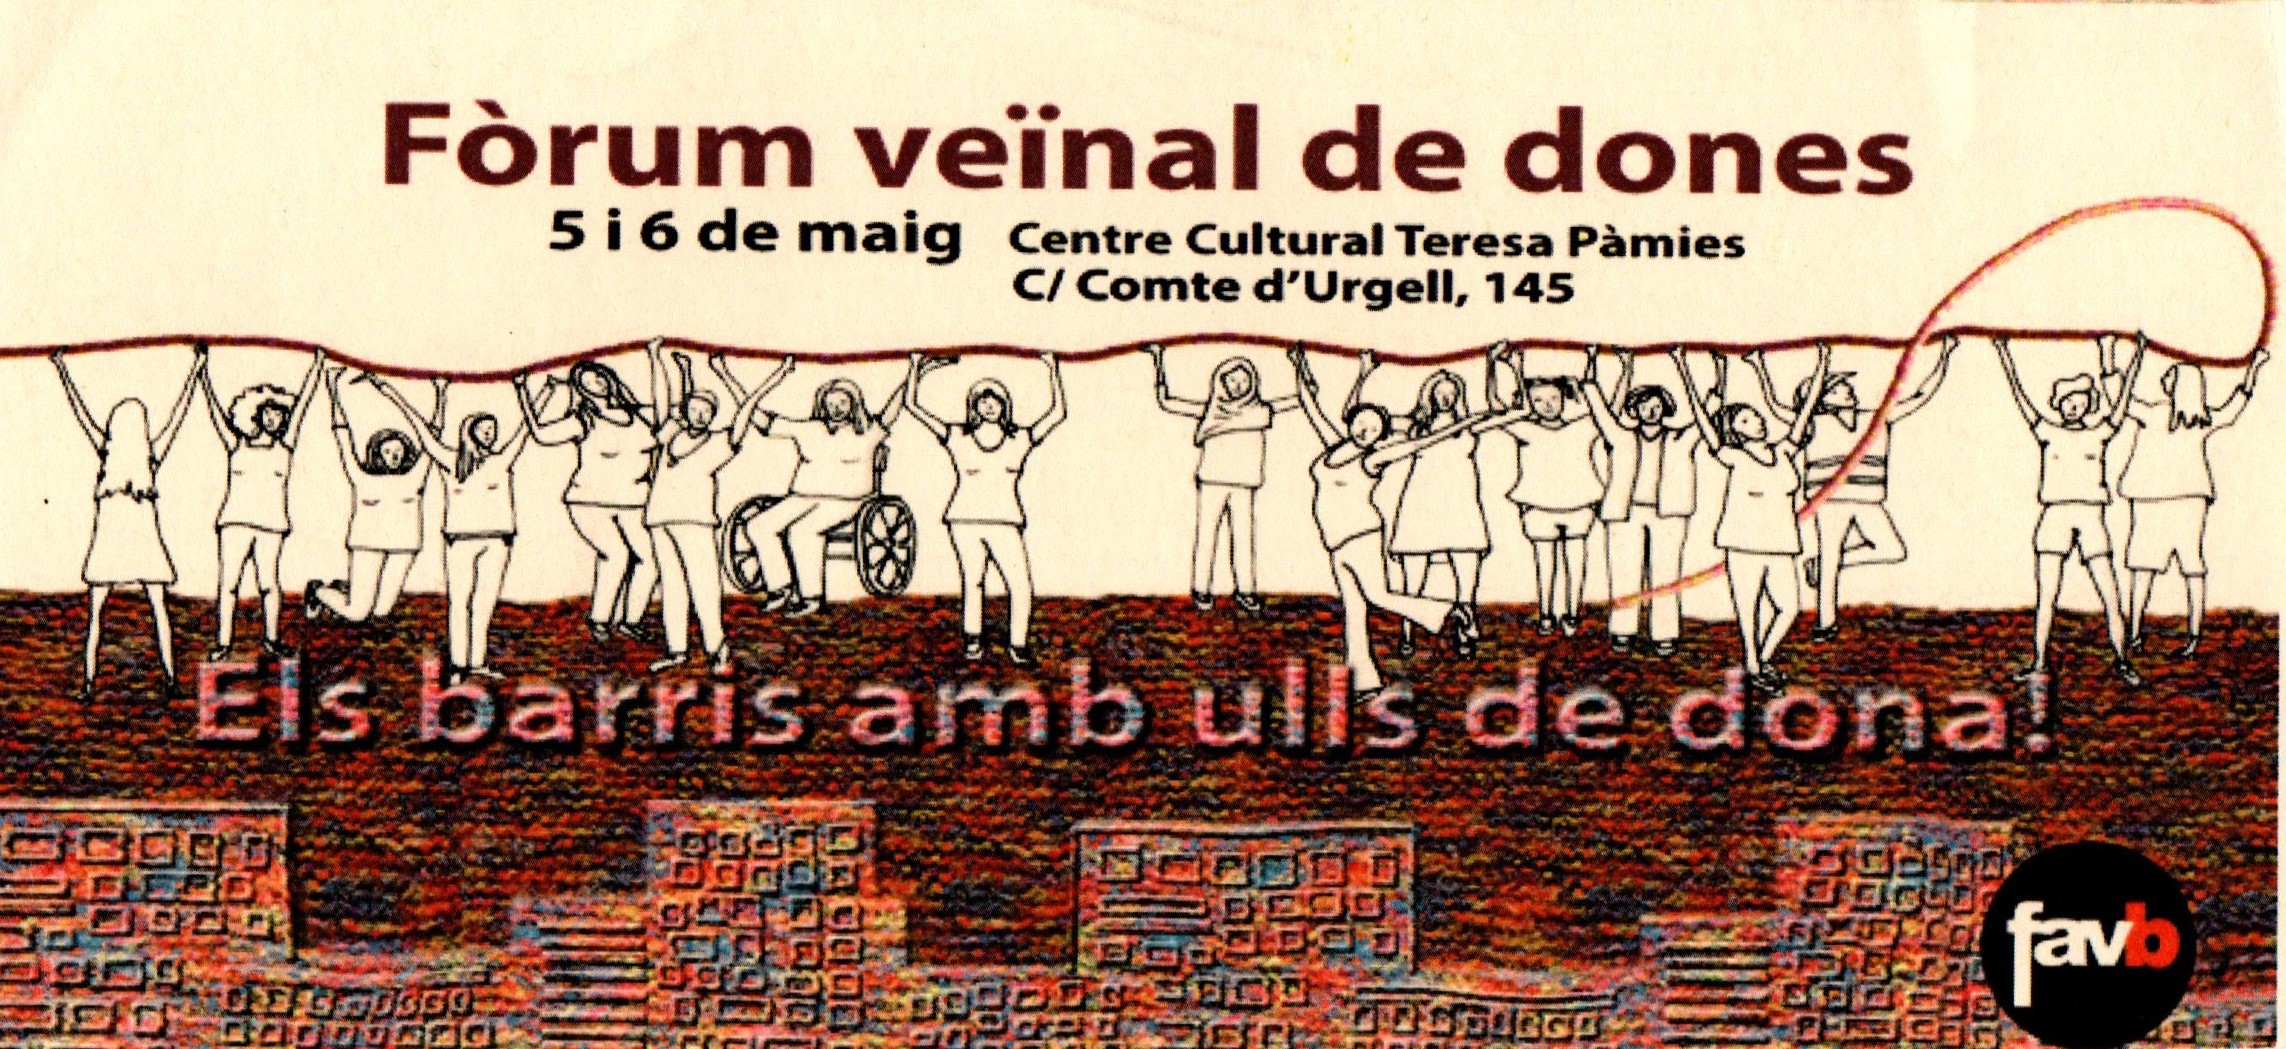 Fórum vecinal Barcelonés de mujeres